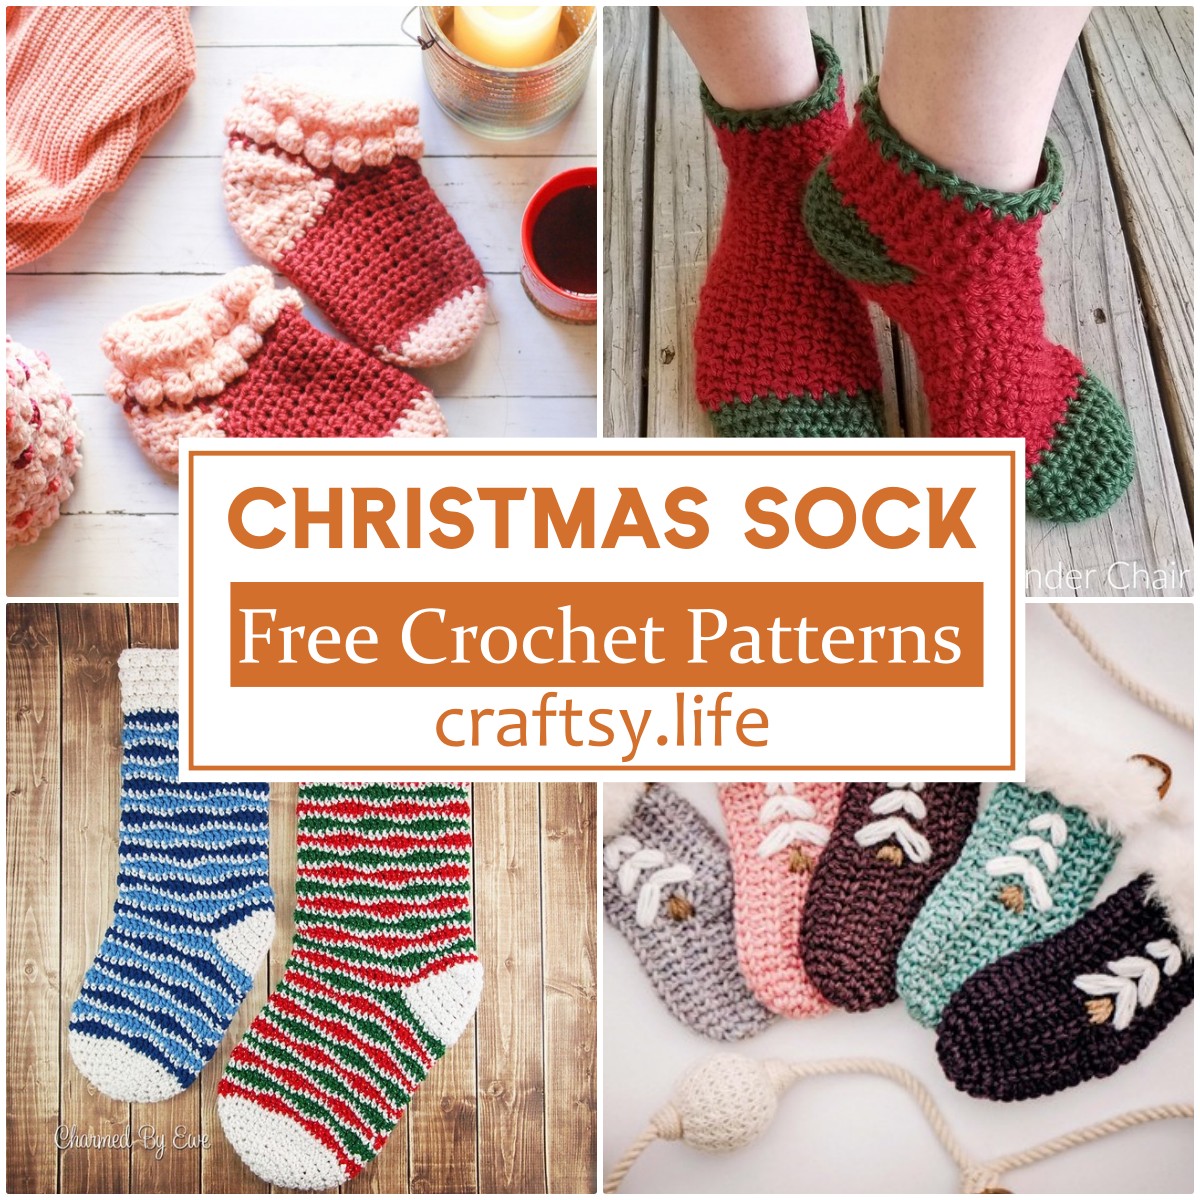 Free Crochet Christmas Sock Patterns